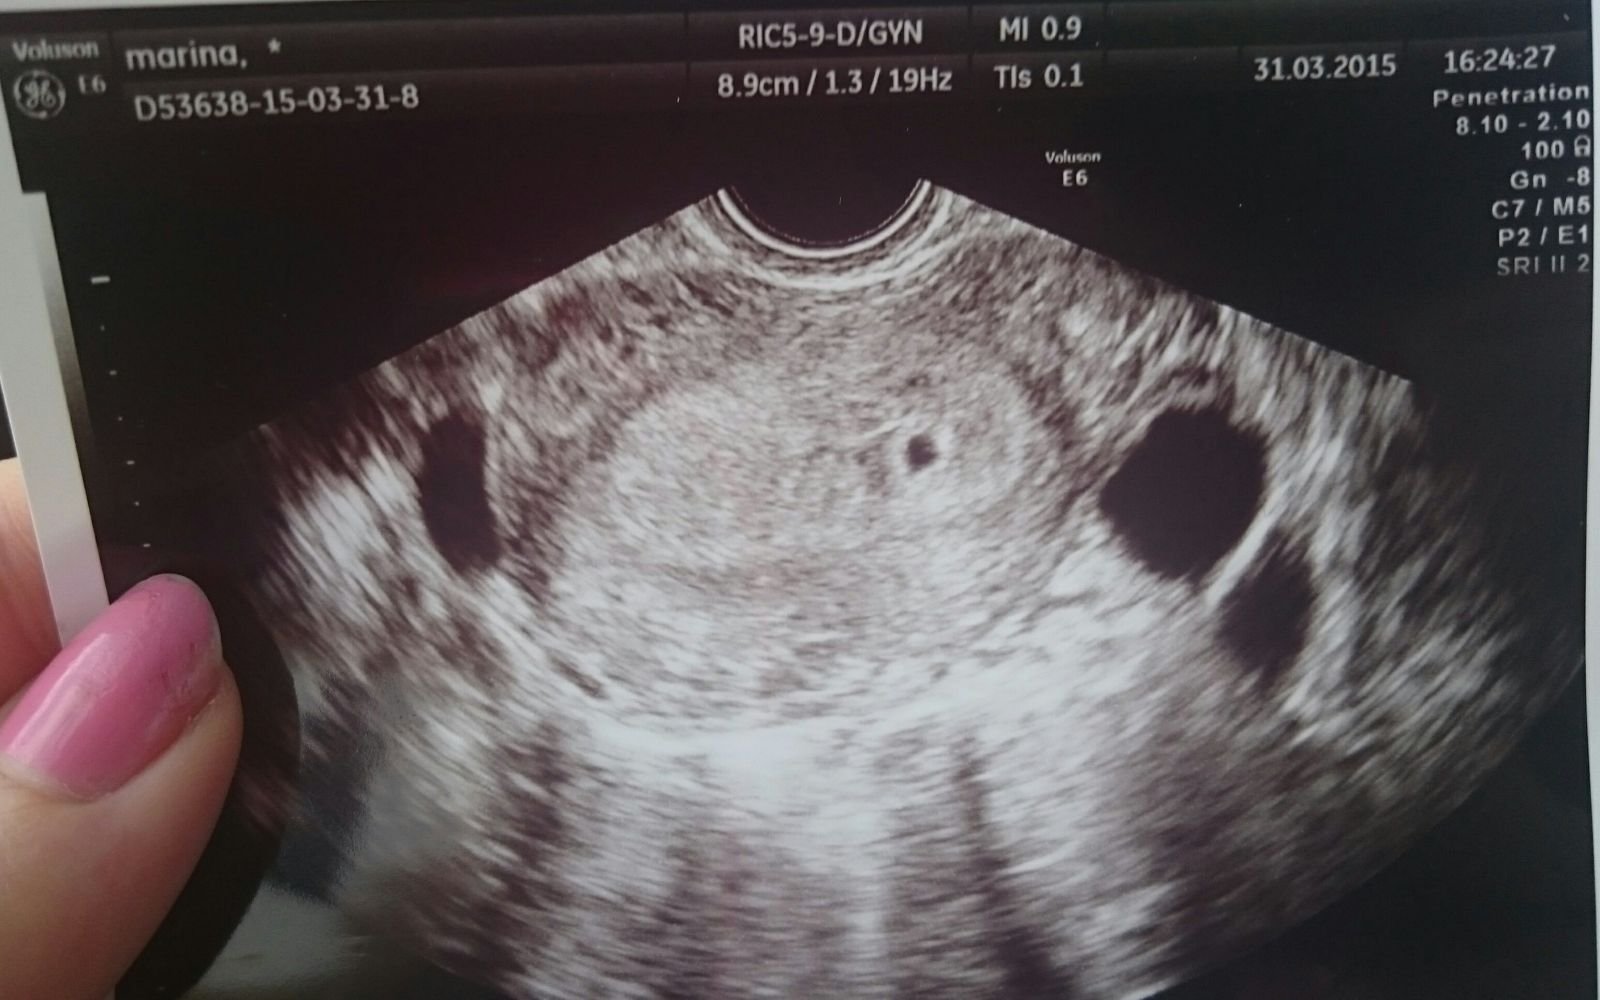 Узи 3 4 недели. Снимок УЗИ 2-3 недели беременности. УЗИ 4 недели беременности. УЗИ на 2-4 недели беременности. Эмбрион на 4 неделе беременности УЗИ.